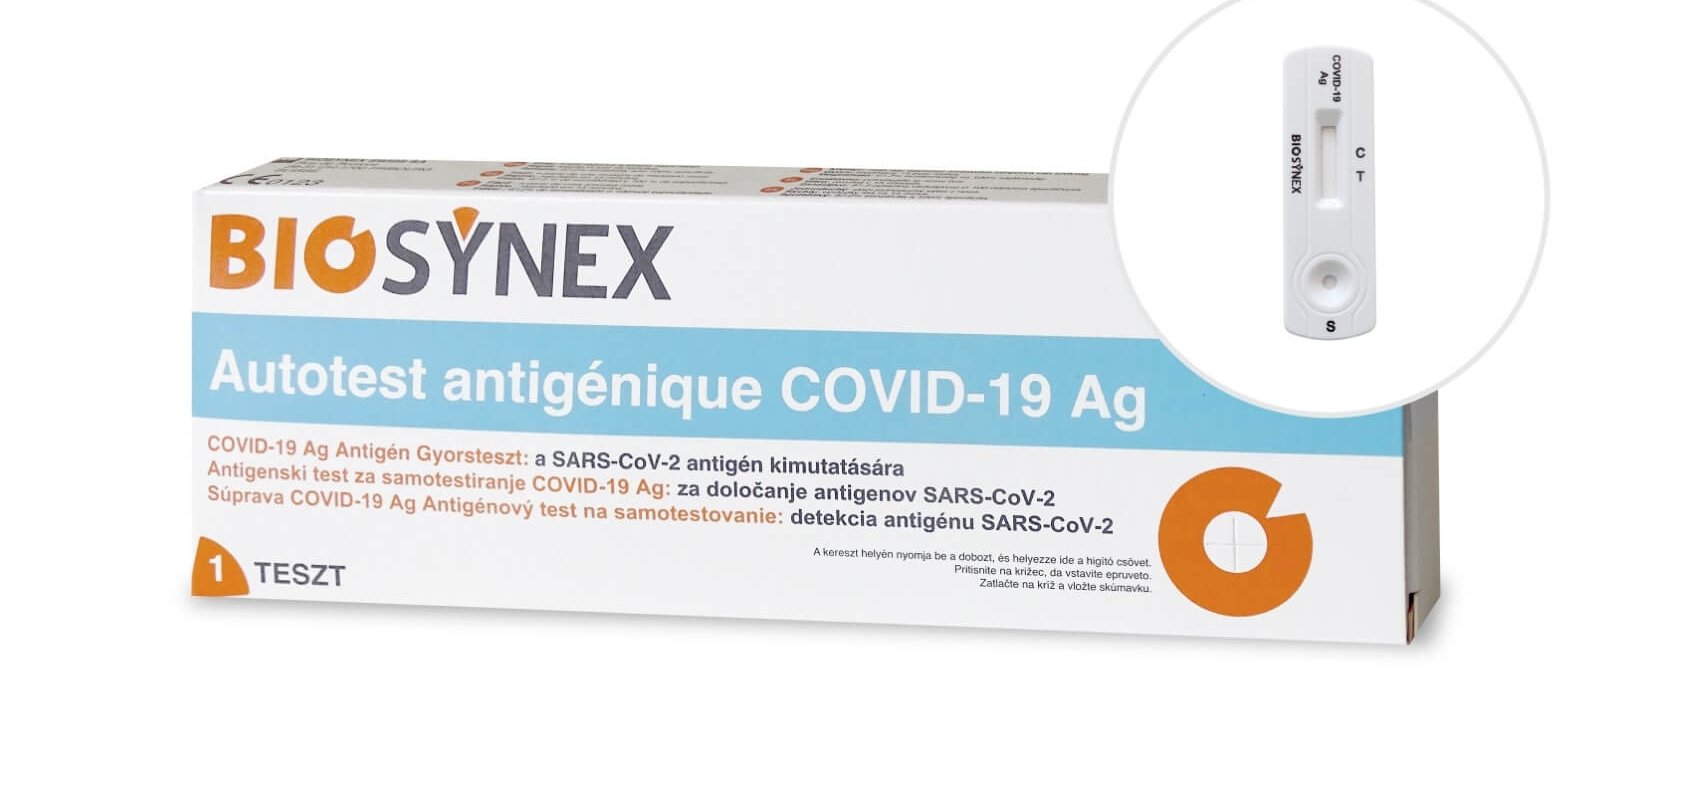 BIOSYNEX Antigenski test za samotestiranje COVID-19 Ag